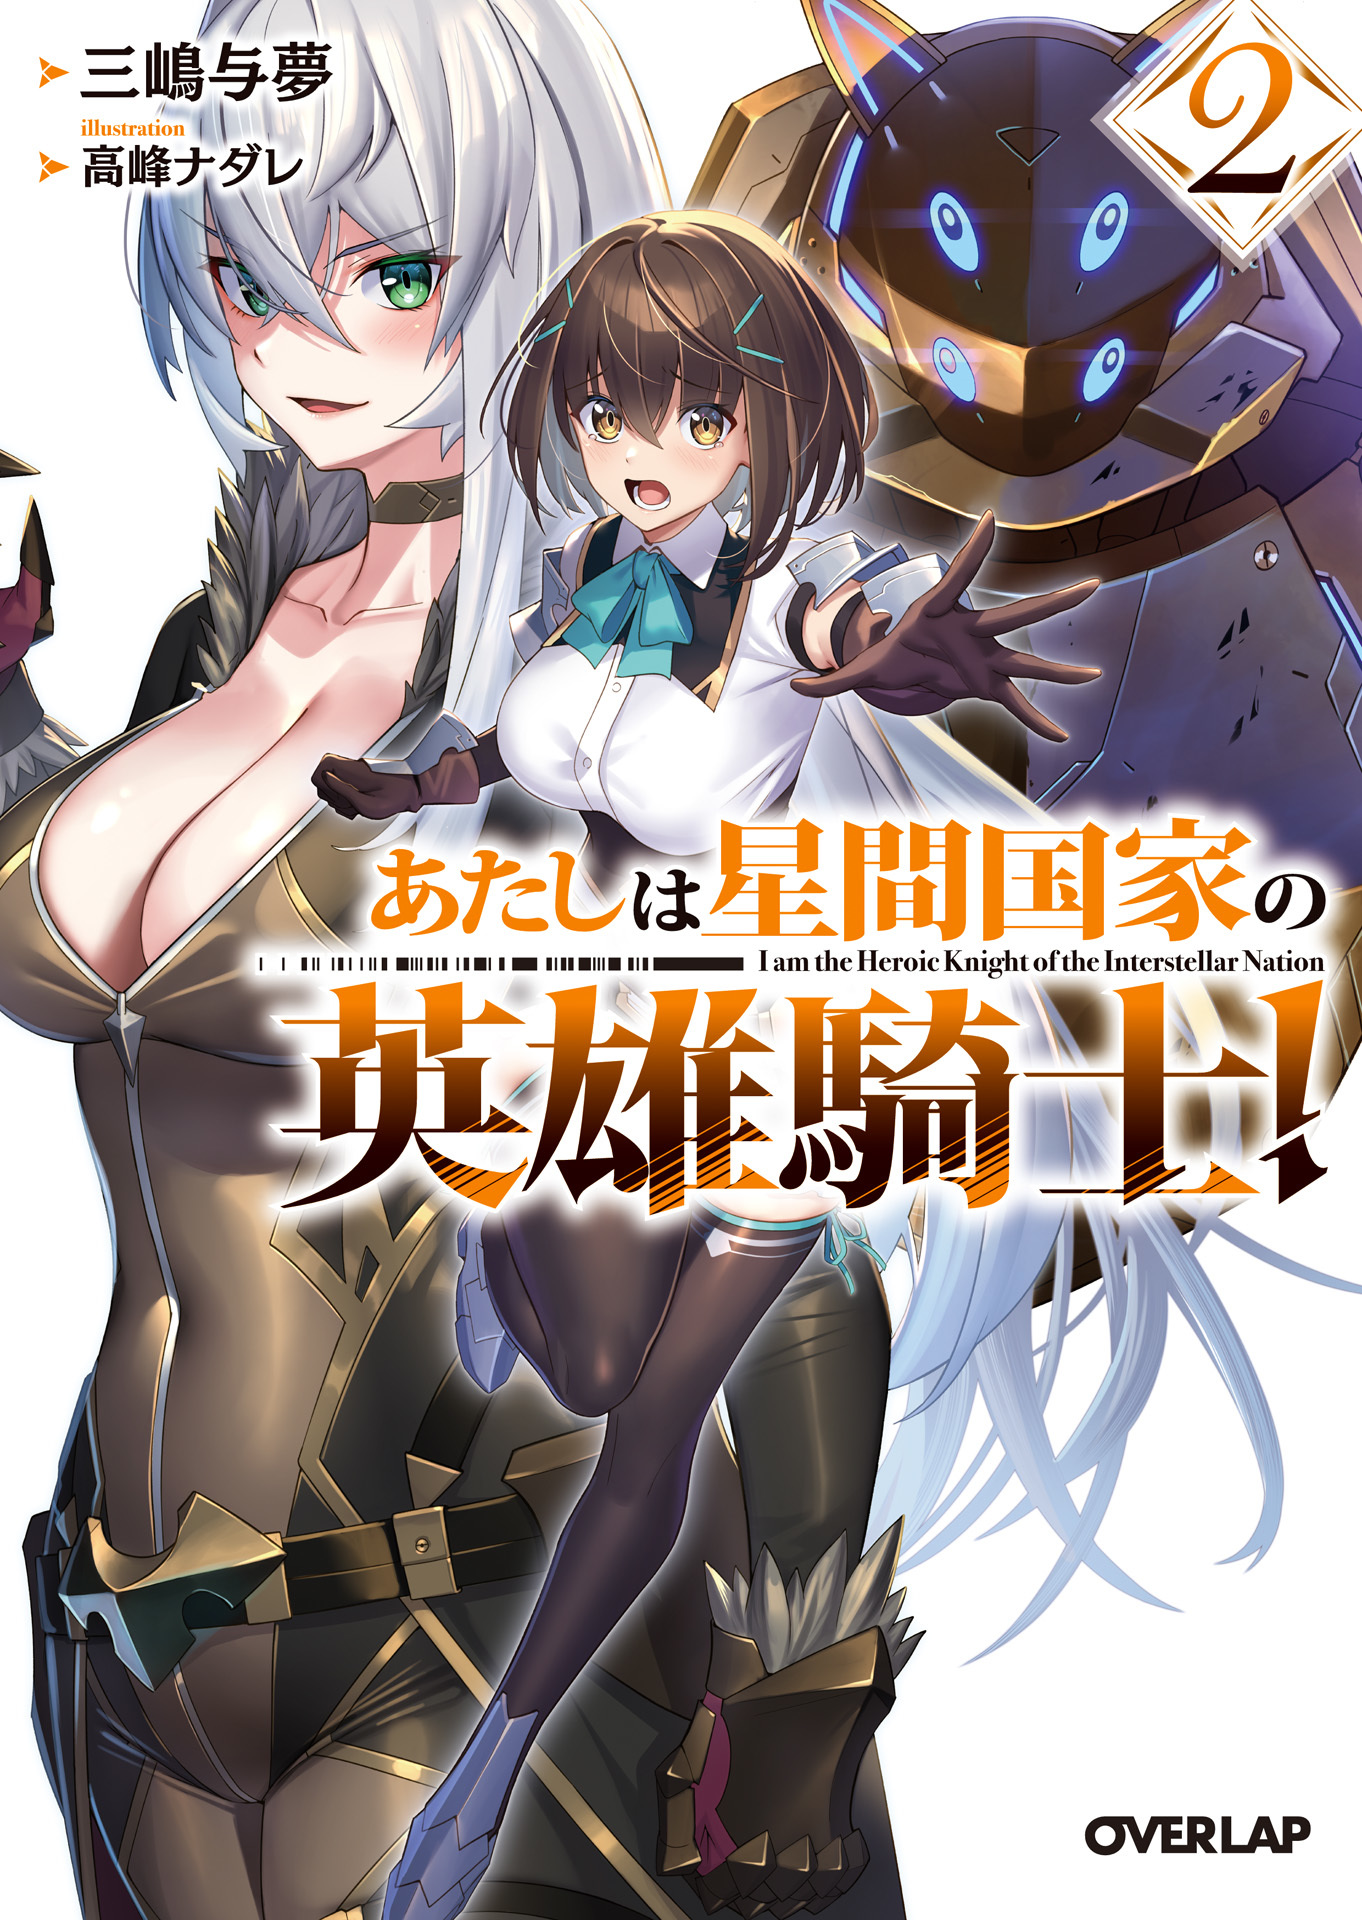 Light Novel Volume 2, Knight's & Magic Wiki